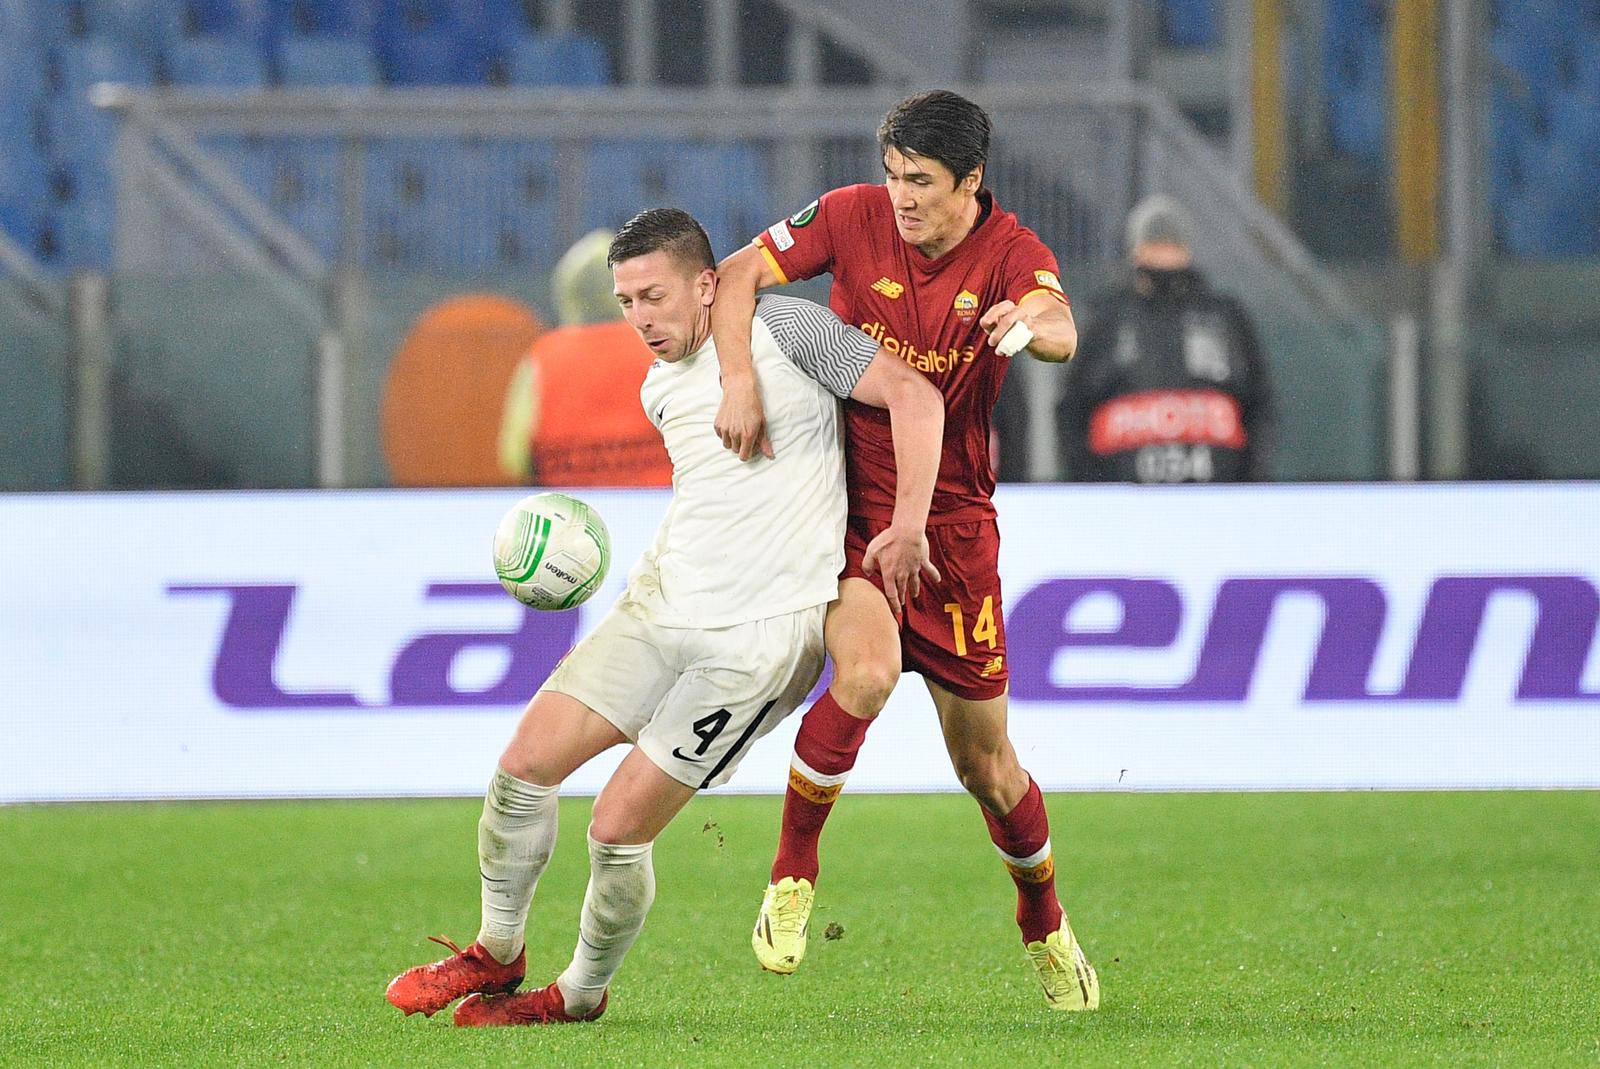 UEFA Conference League football match - AS Roma vs Zorya Luhansk